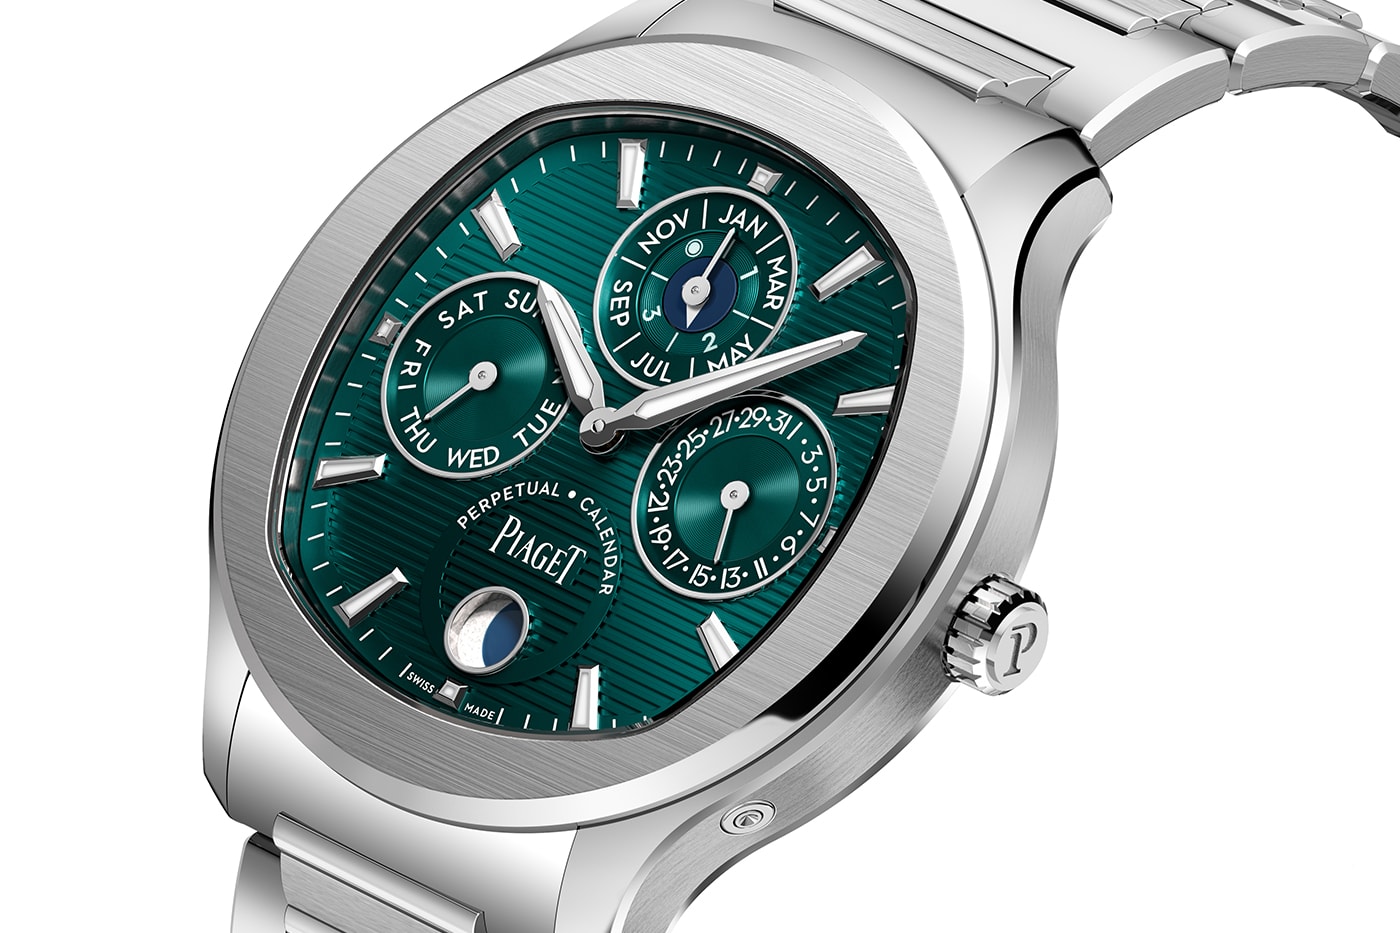 Piaget Polo Perpetual Calendar Ultra-Thin Watch 